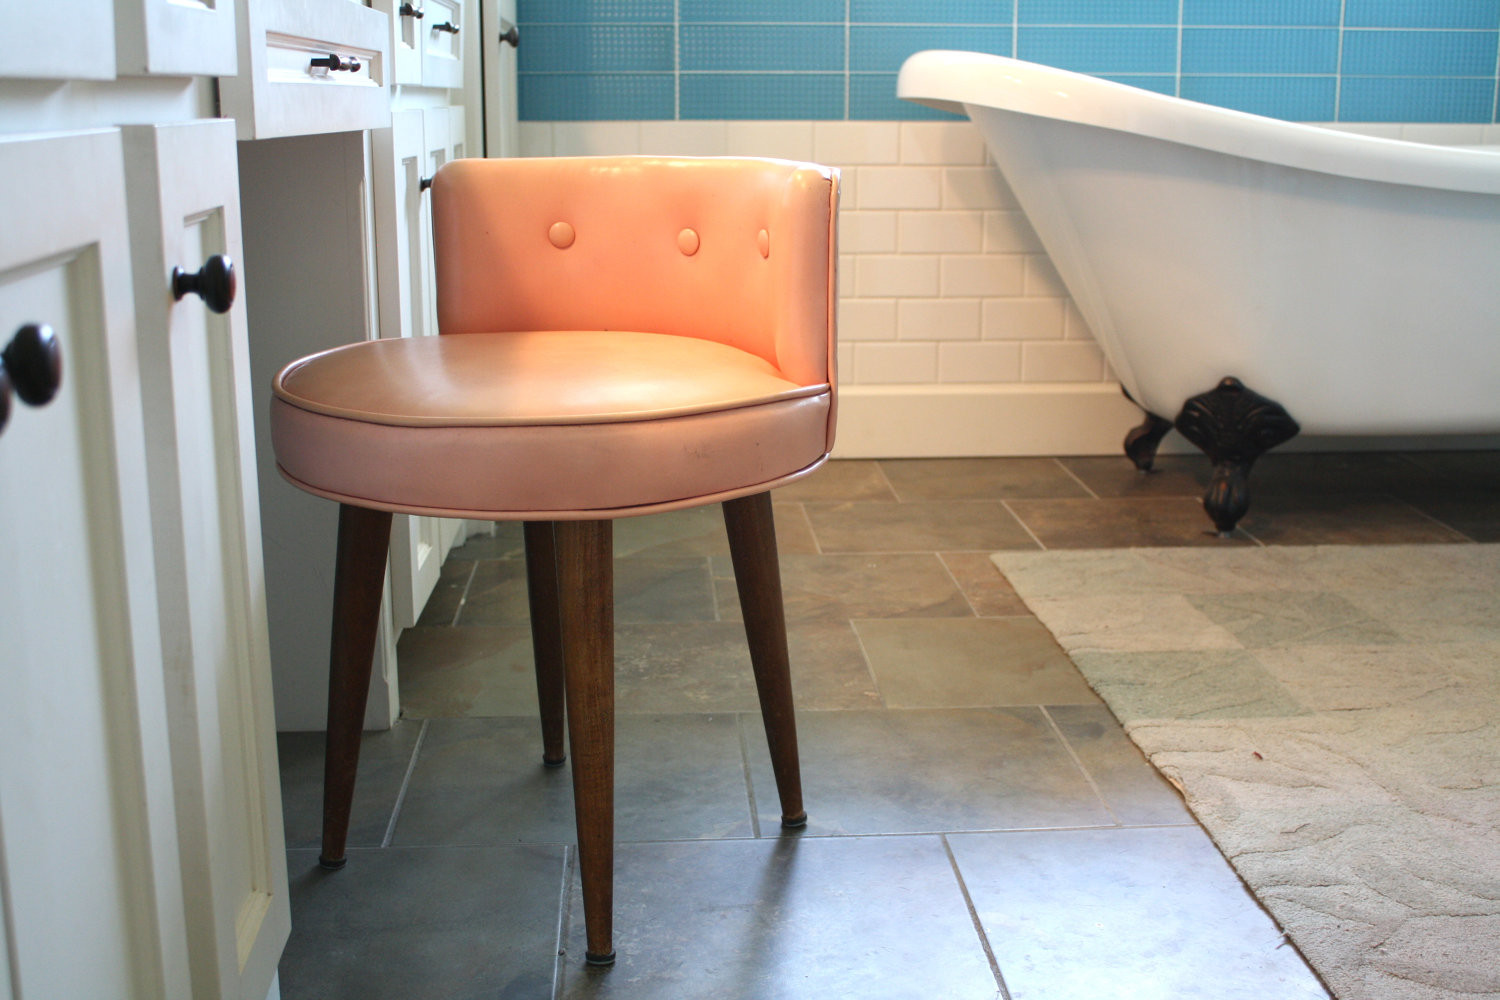 Bathroom Vanity Chair From Home Homegoods